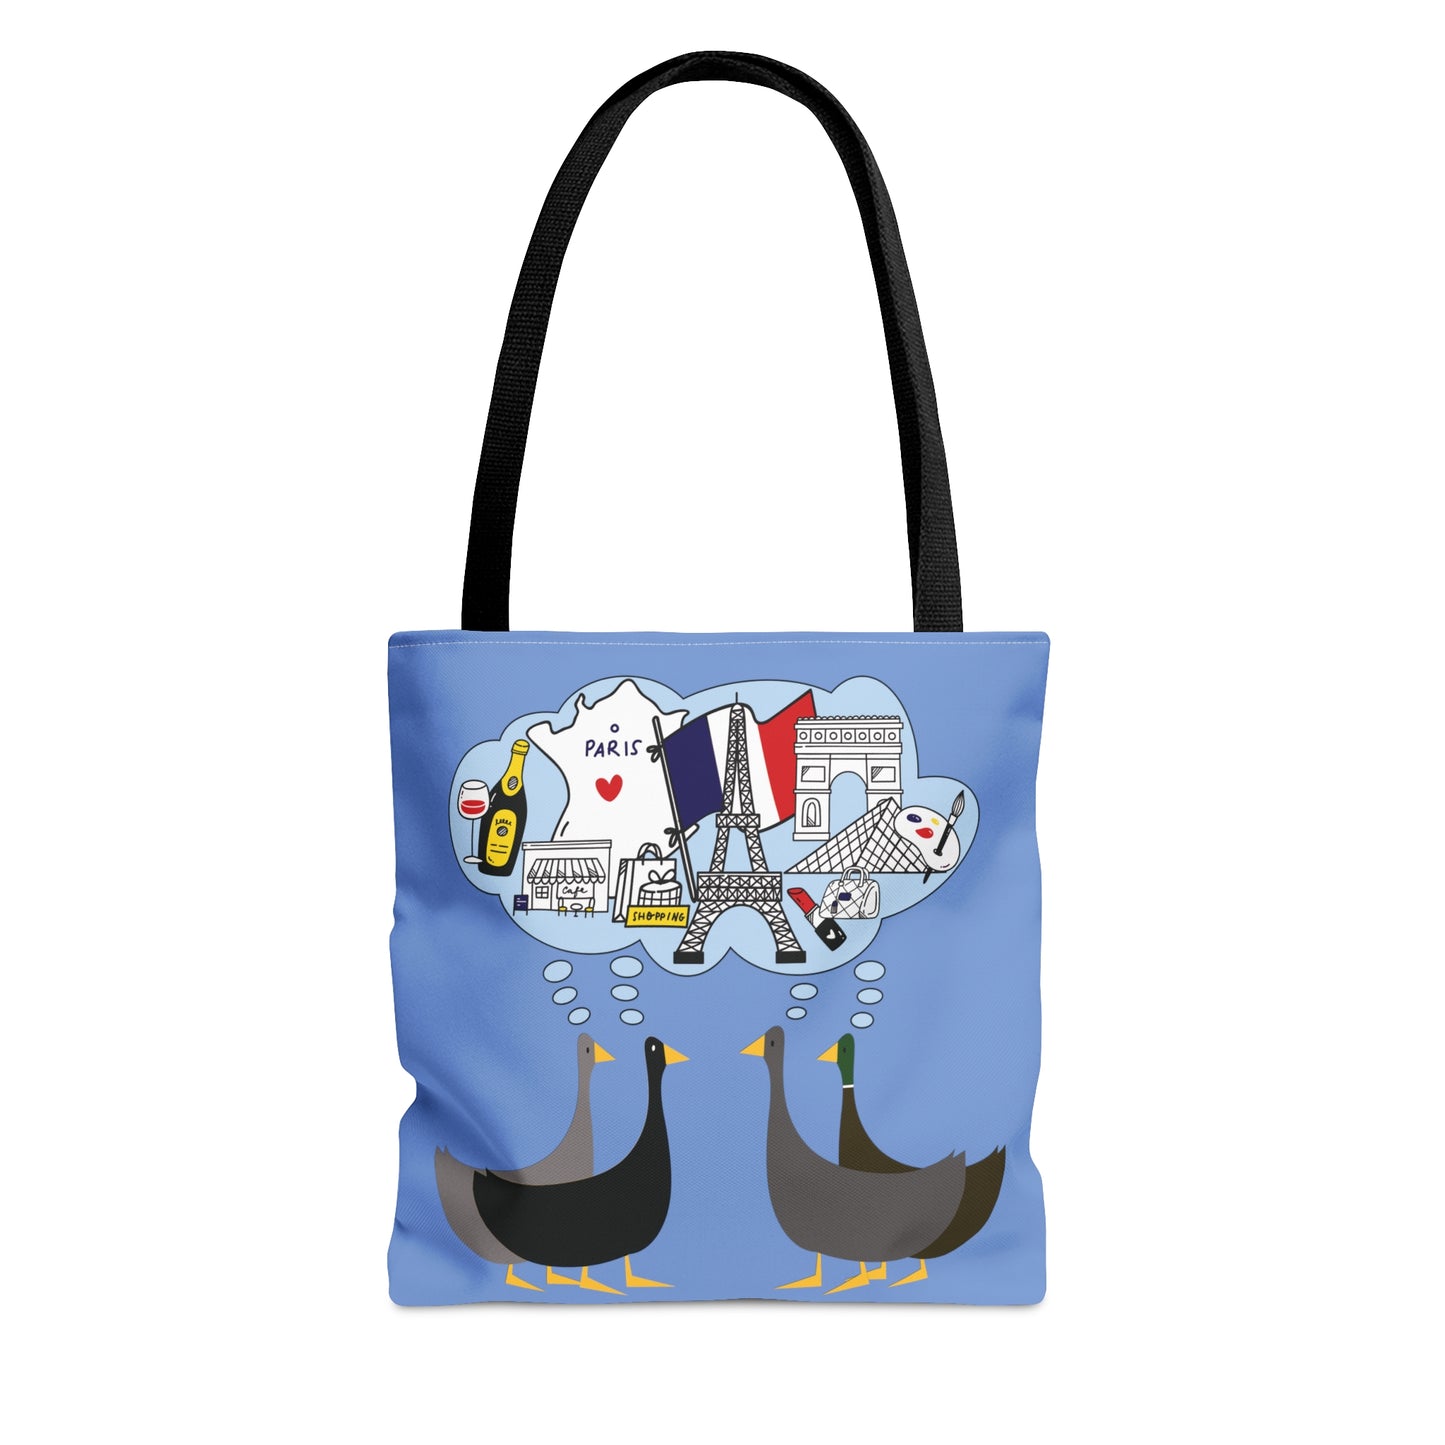 Ducks dreaming of Paris - Fennel Flower 74a6ff - Tote Bag